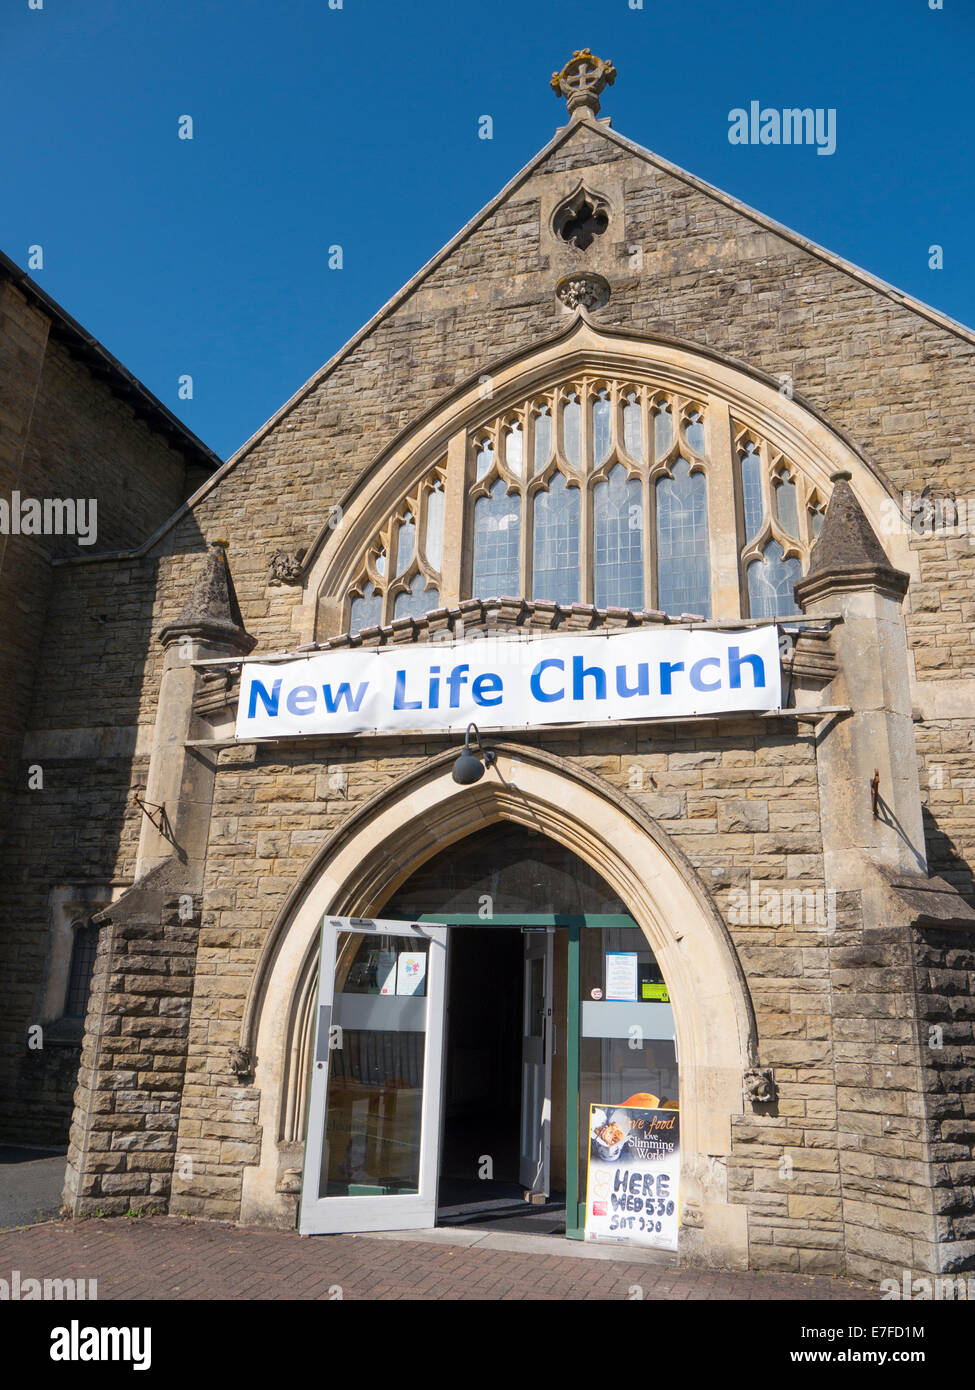 The New Life Church entrance in Llandrindod Wells, Powys Wales UK. Stock Photo